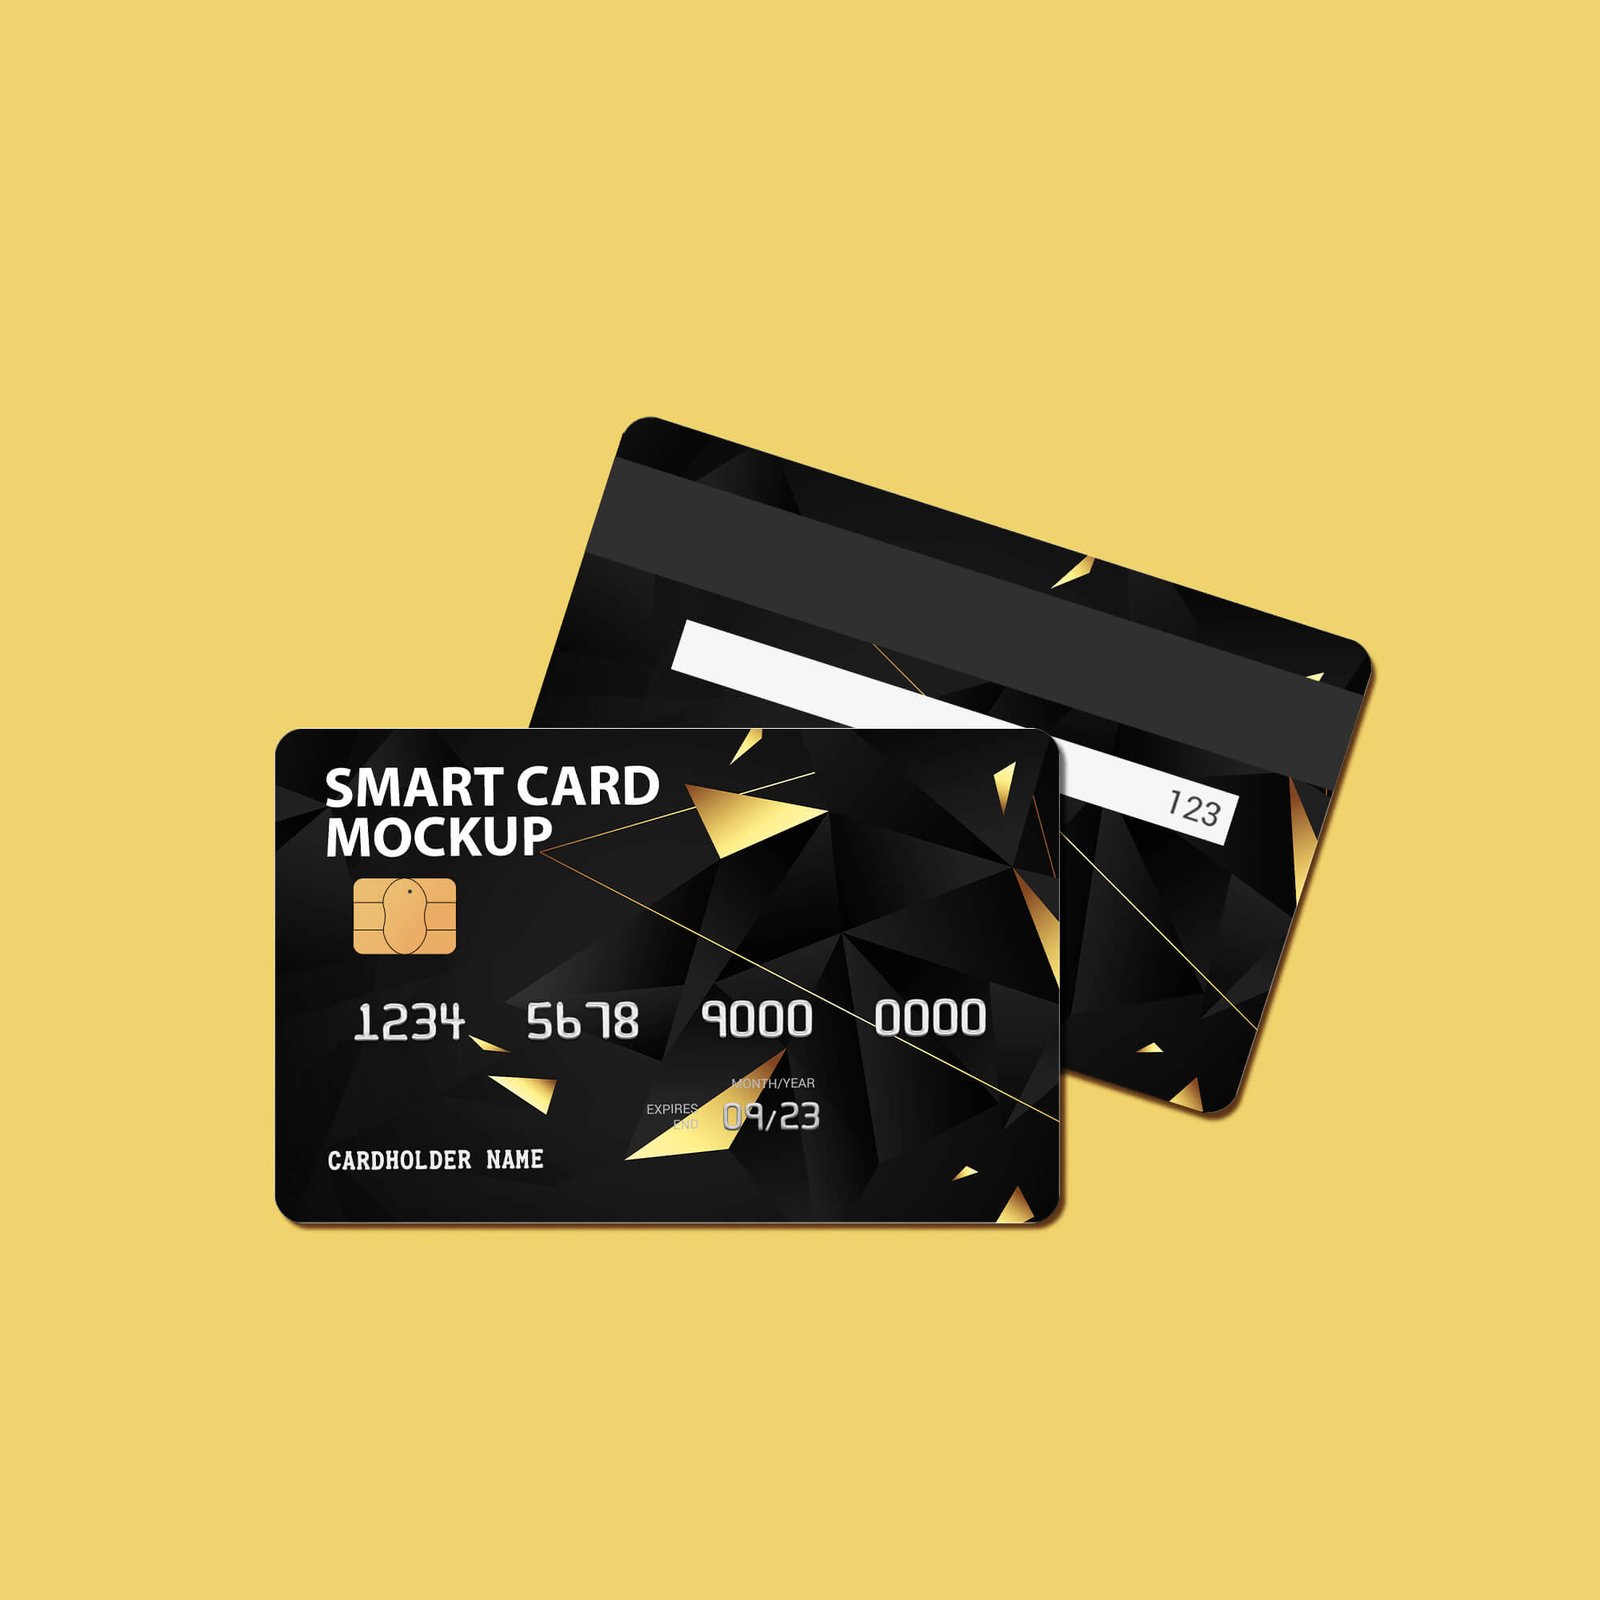 Design Free Smart Card Mockup PSD Template